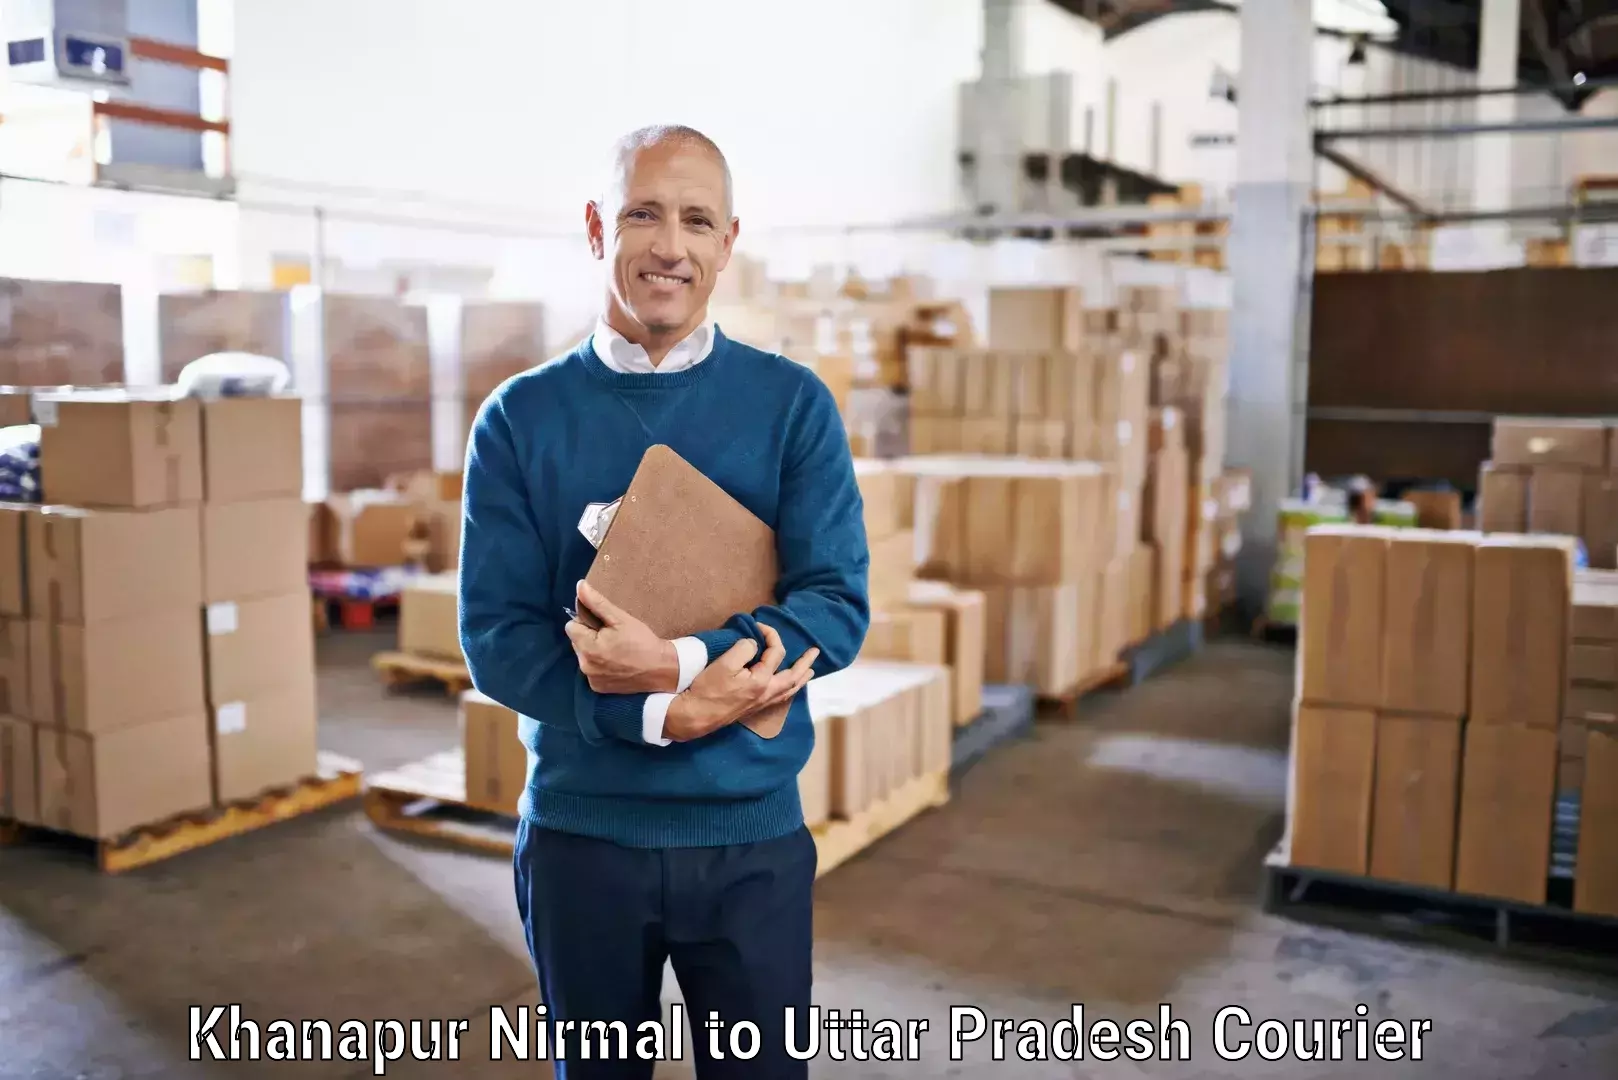 Modern delivery methods Khanapur Nirmal to Uttar Pradesh